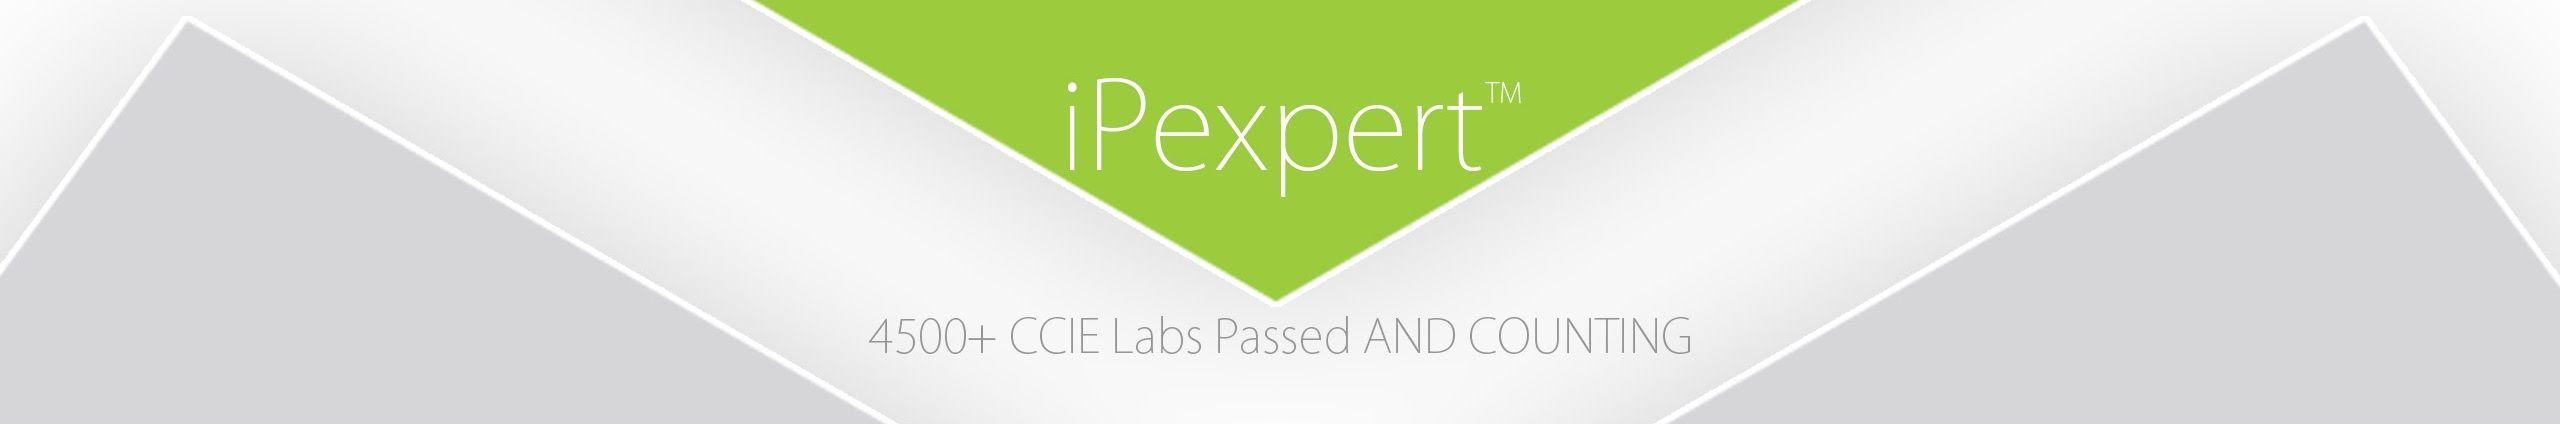 IPexpert Logo - IPexpertInc